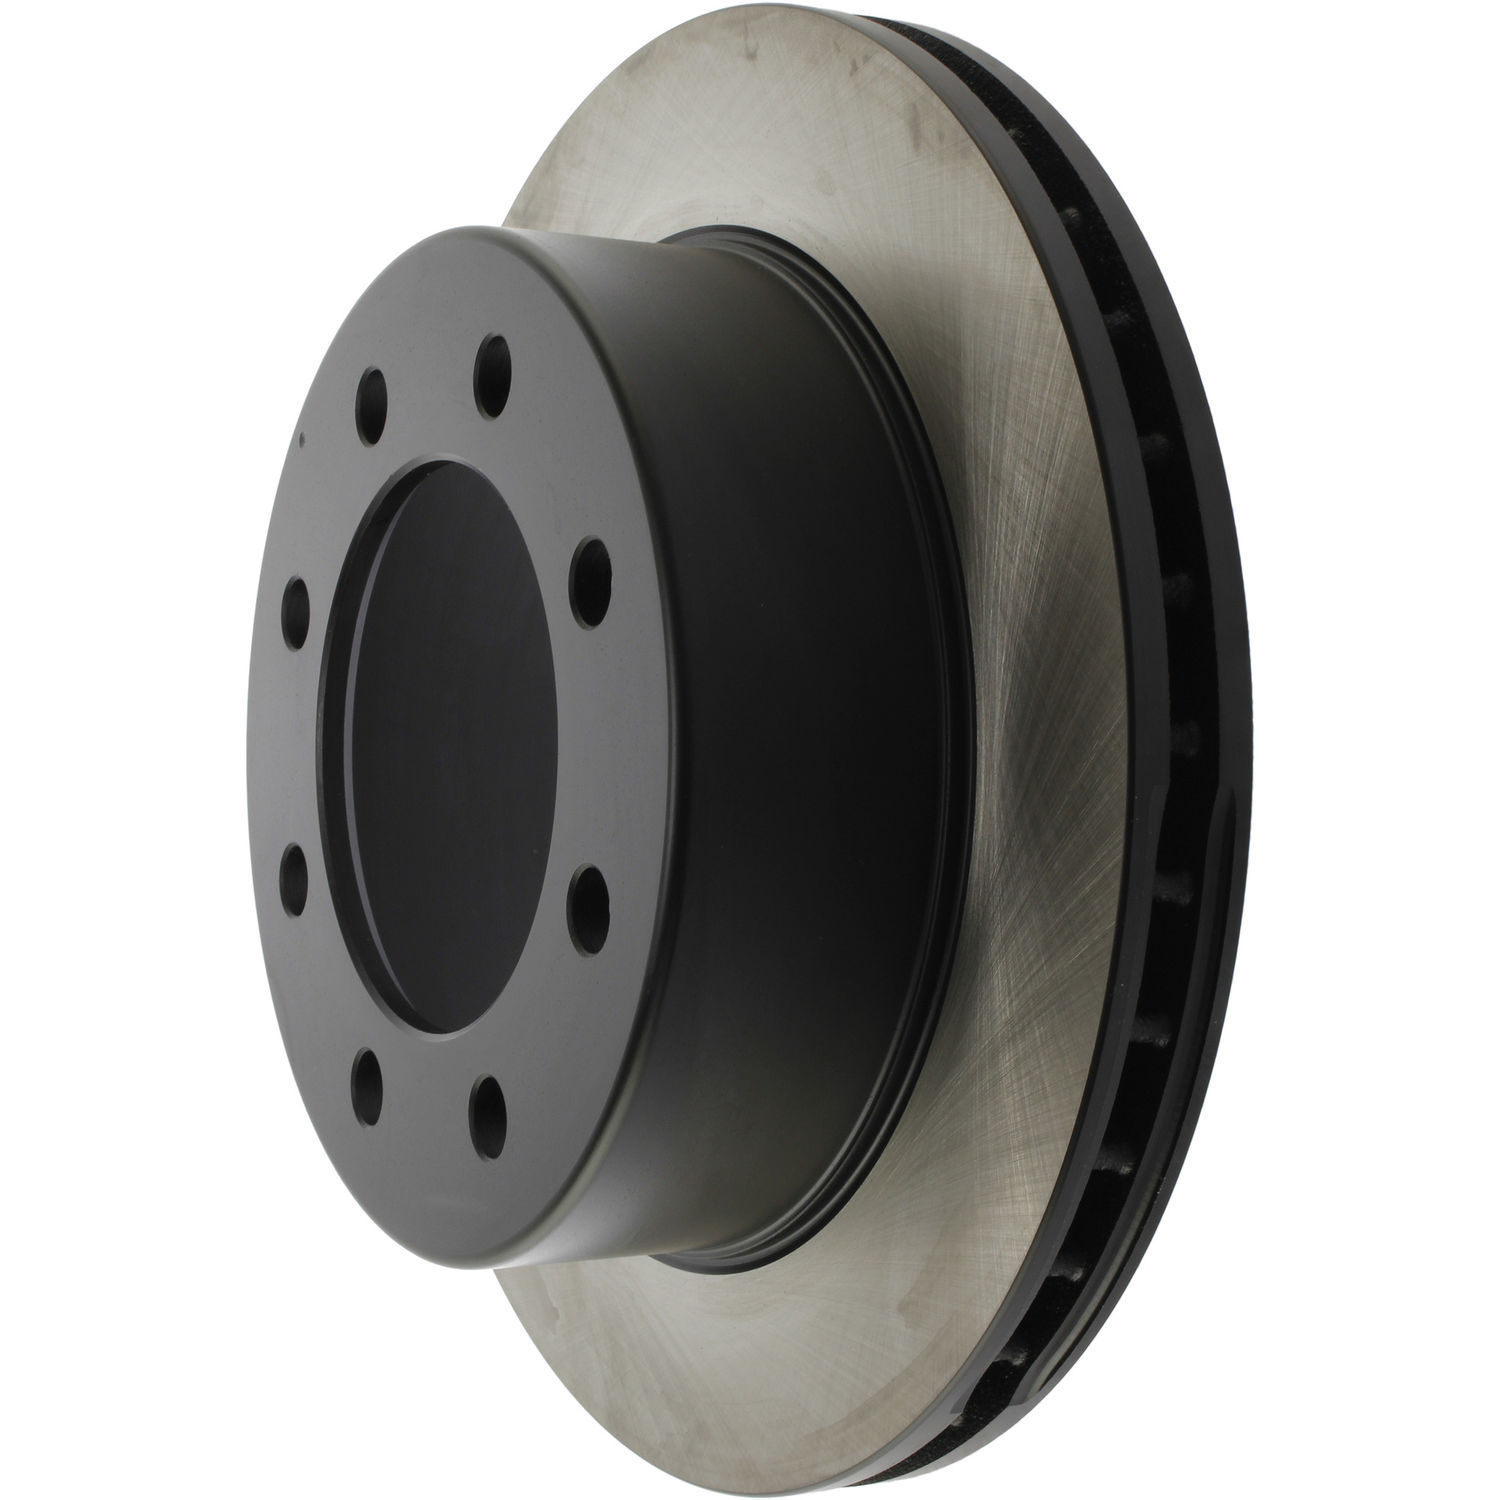 CENTRIC PARTS - High Carbon Alloy Brake Disc (Rear) - CEC 125.66044